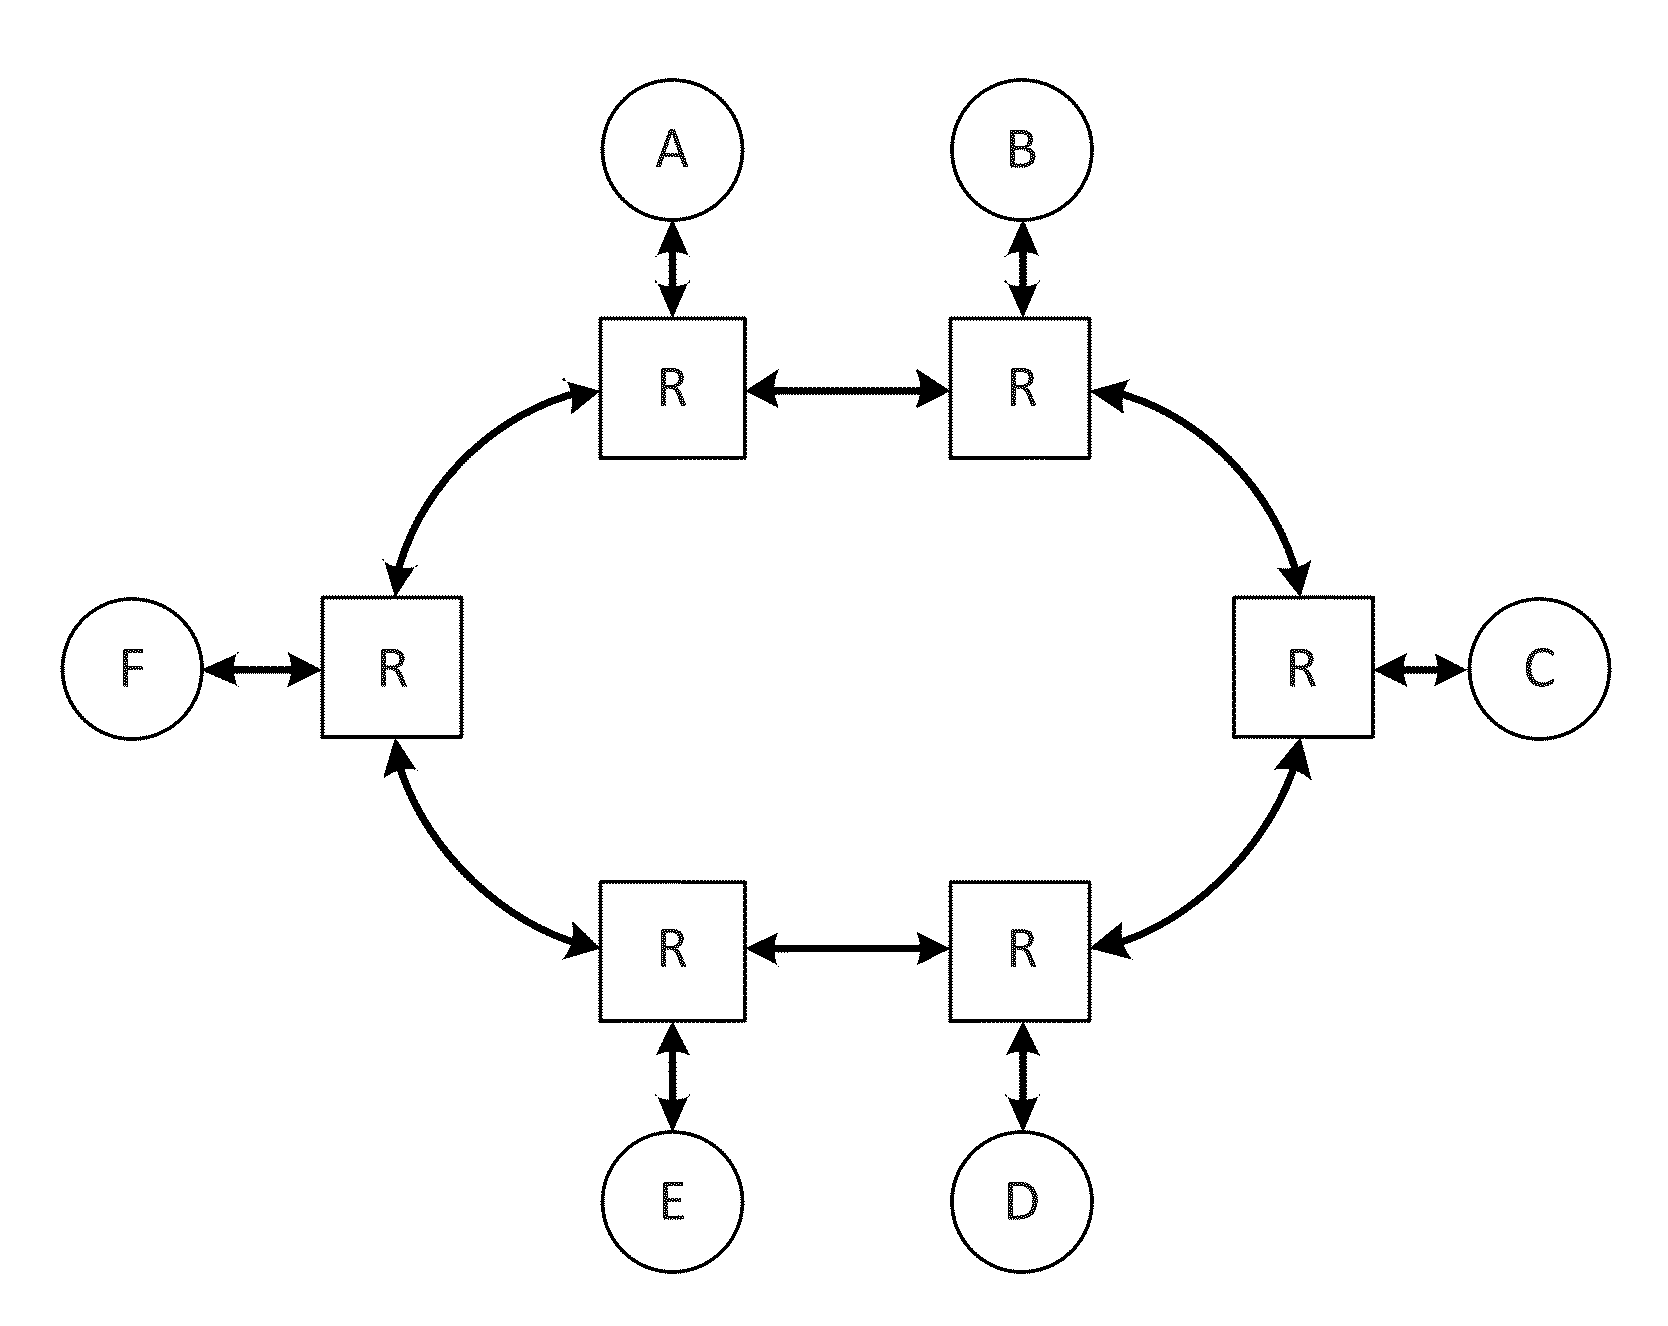 Heterogeneous channel capacities in an interconnect